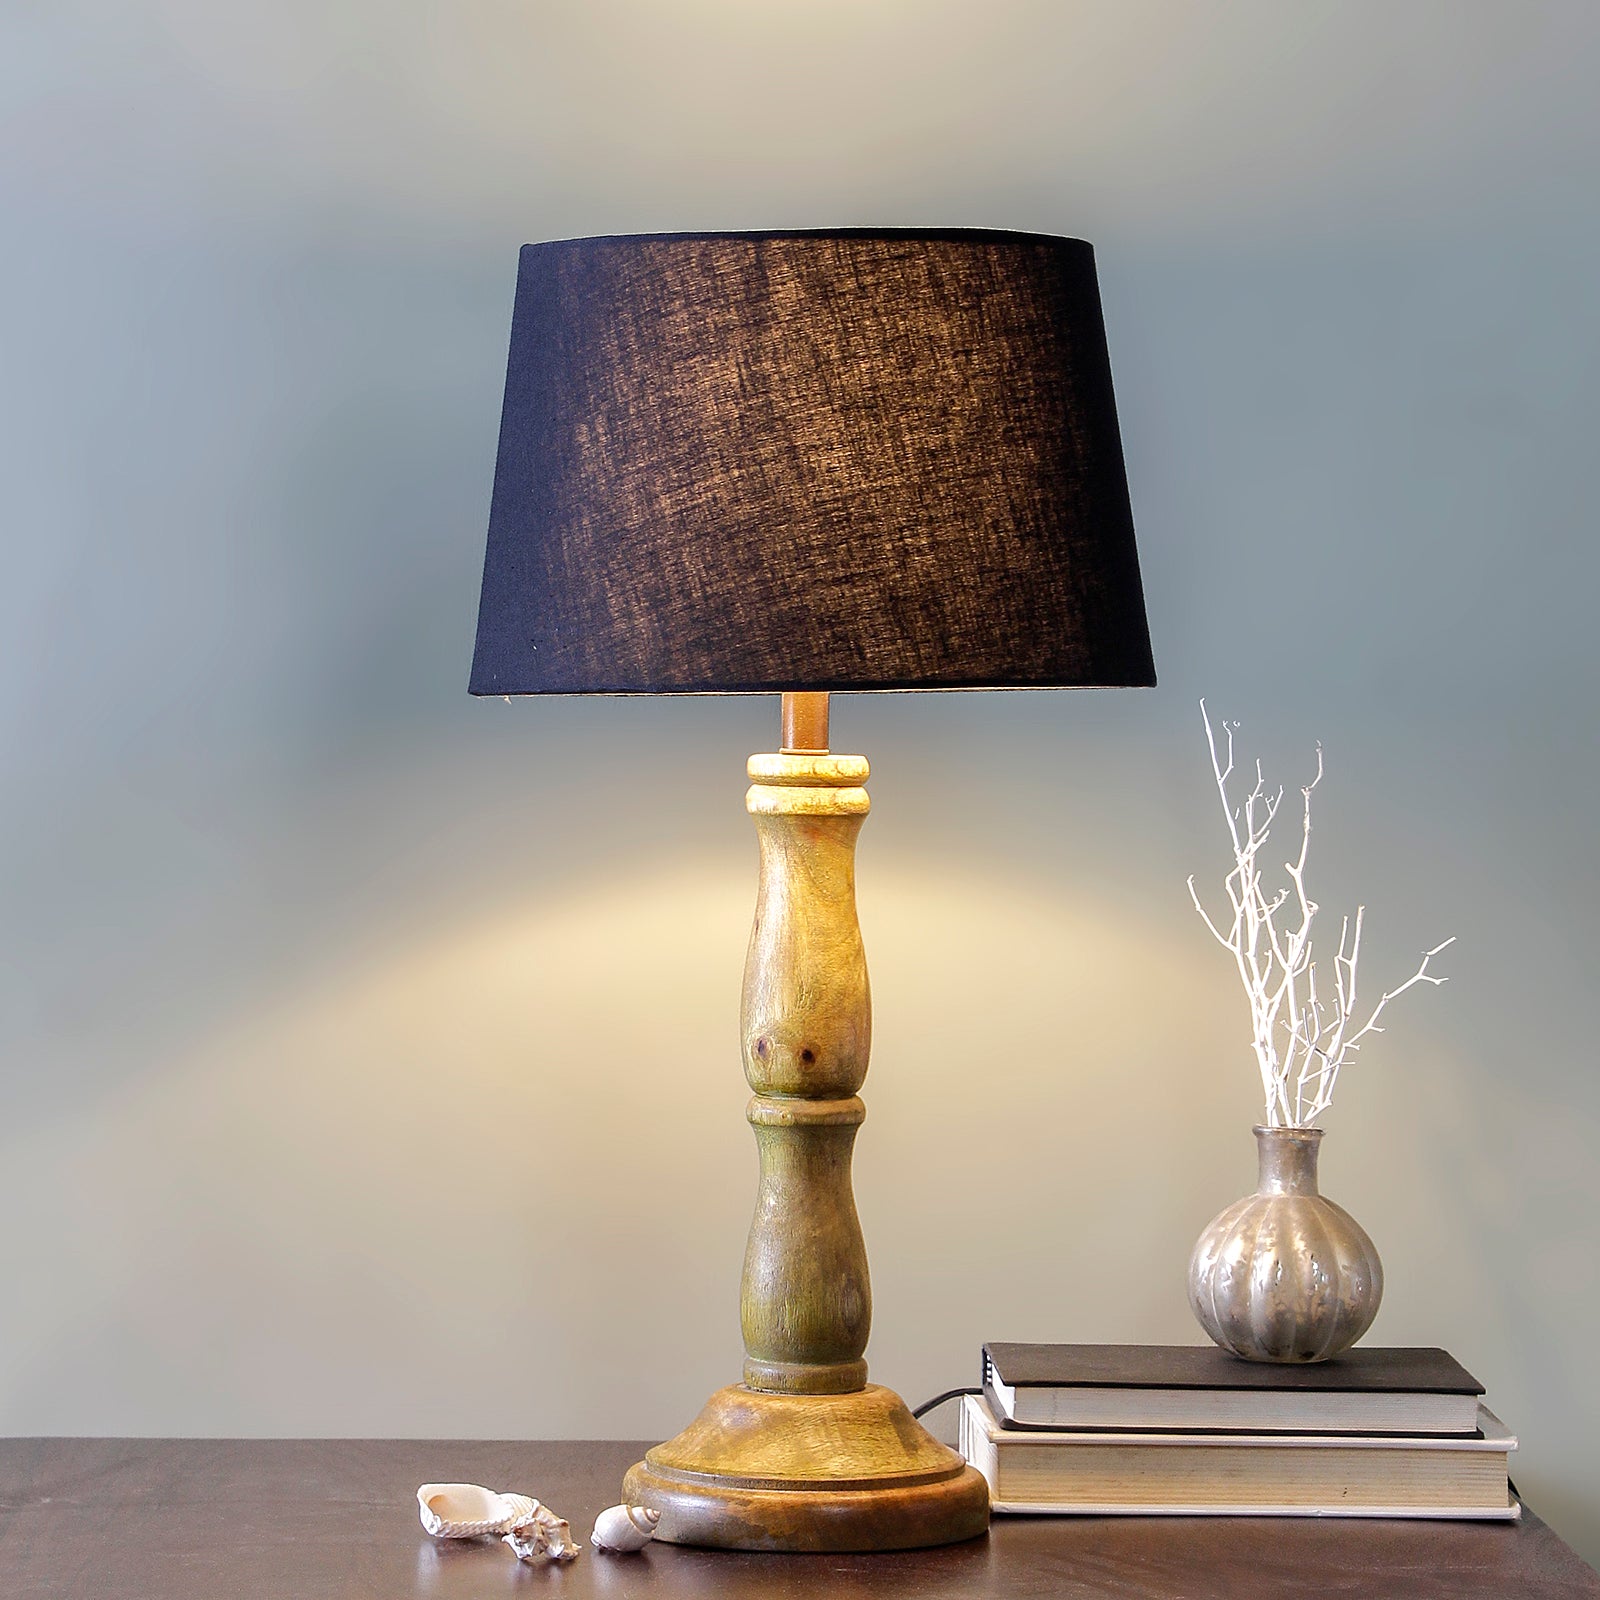 Charlotte Wood Table Lamp